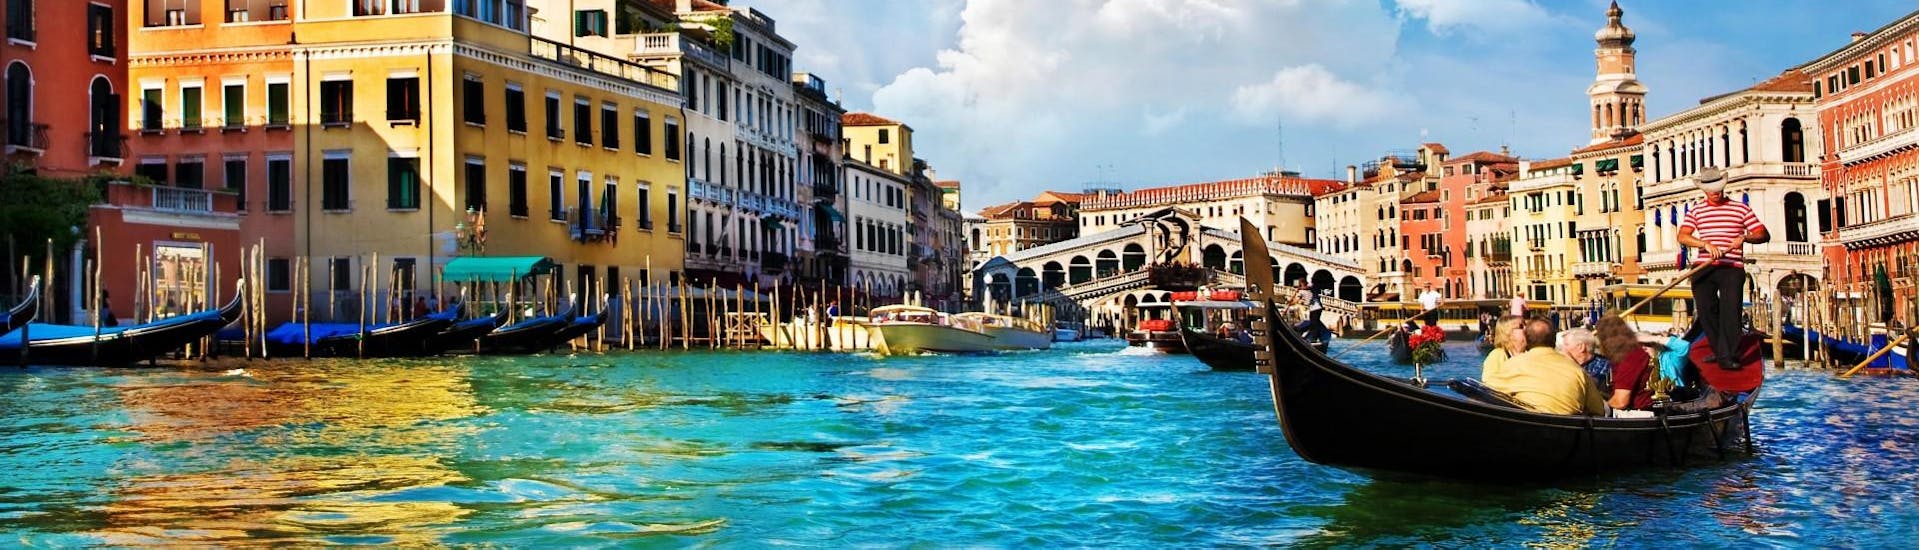 Bootstour auf dem Canal Grande in Venedig.